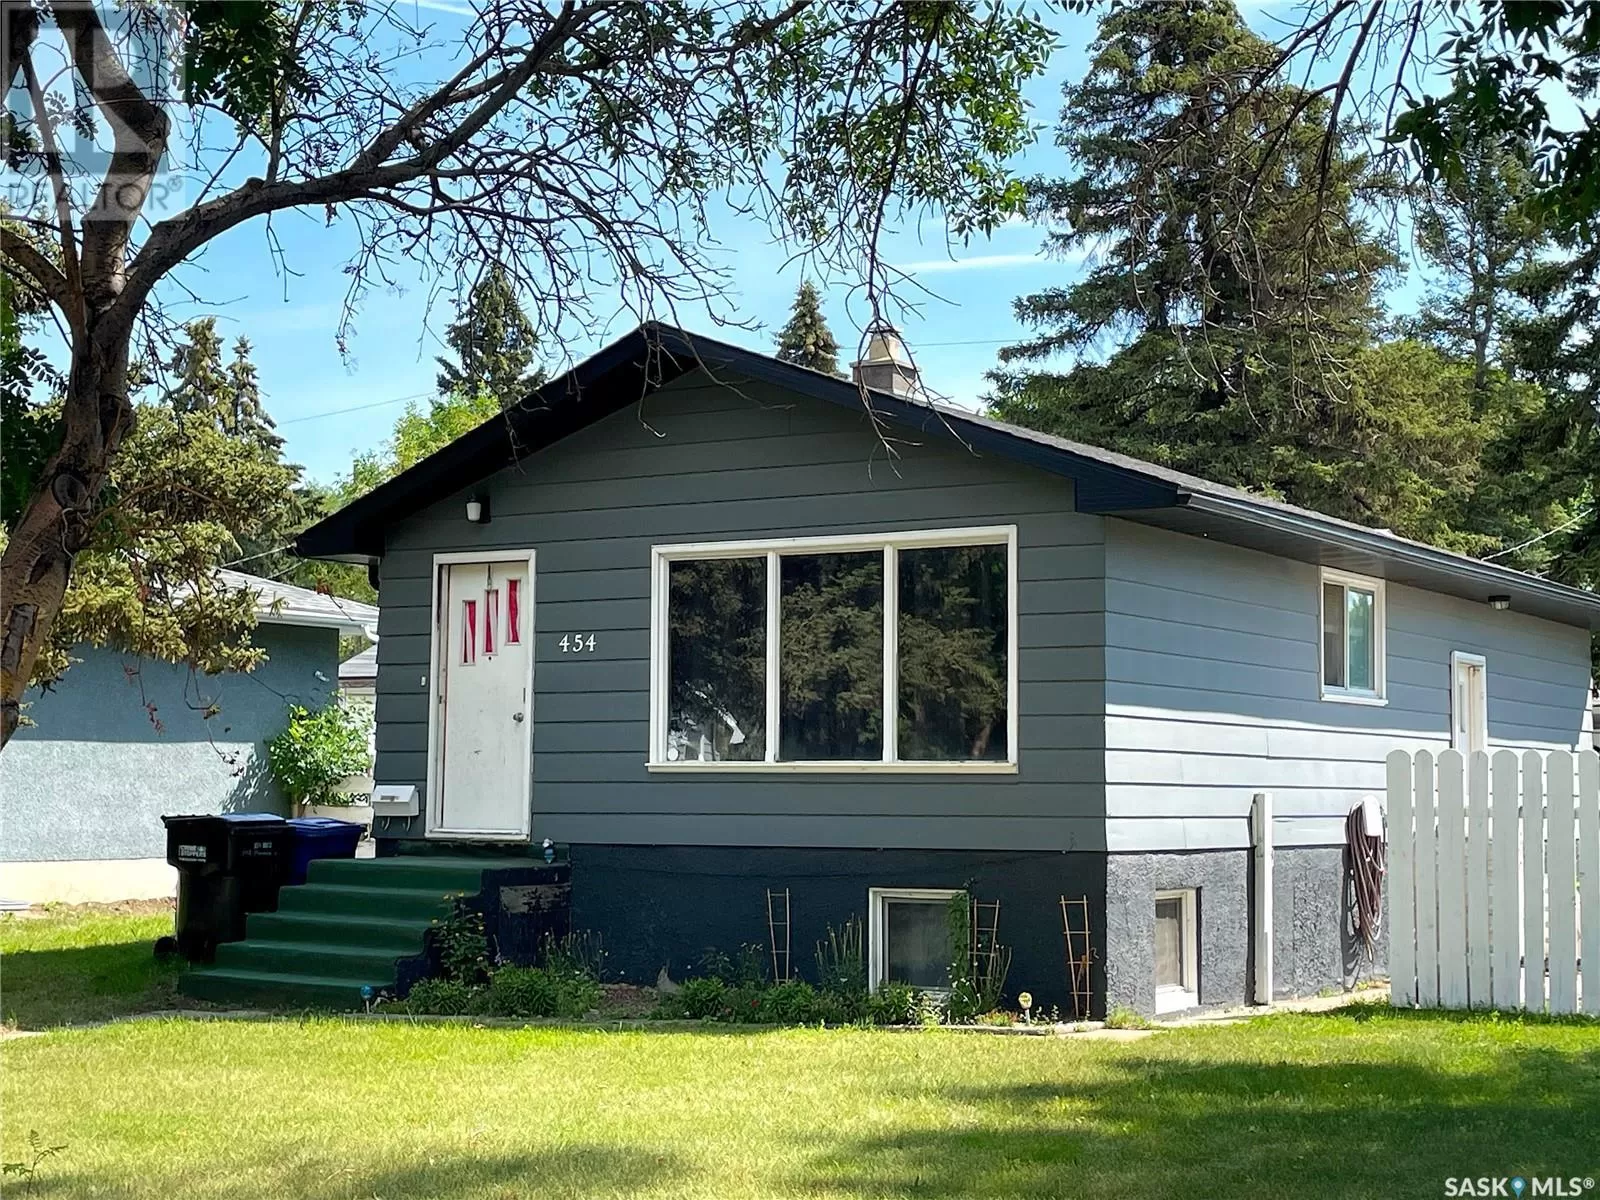 House for rent: 454 Montreal Avenue S, Saskatoon, Saskatchewan S7M 3L3